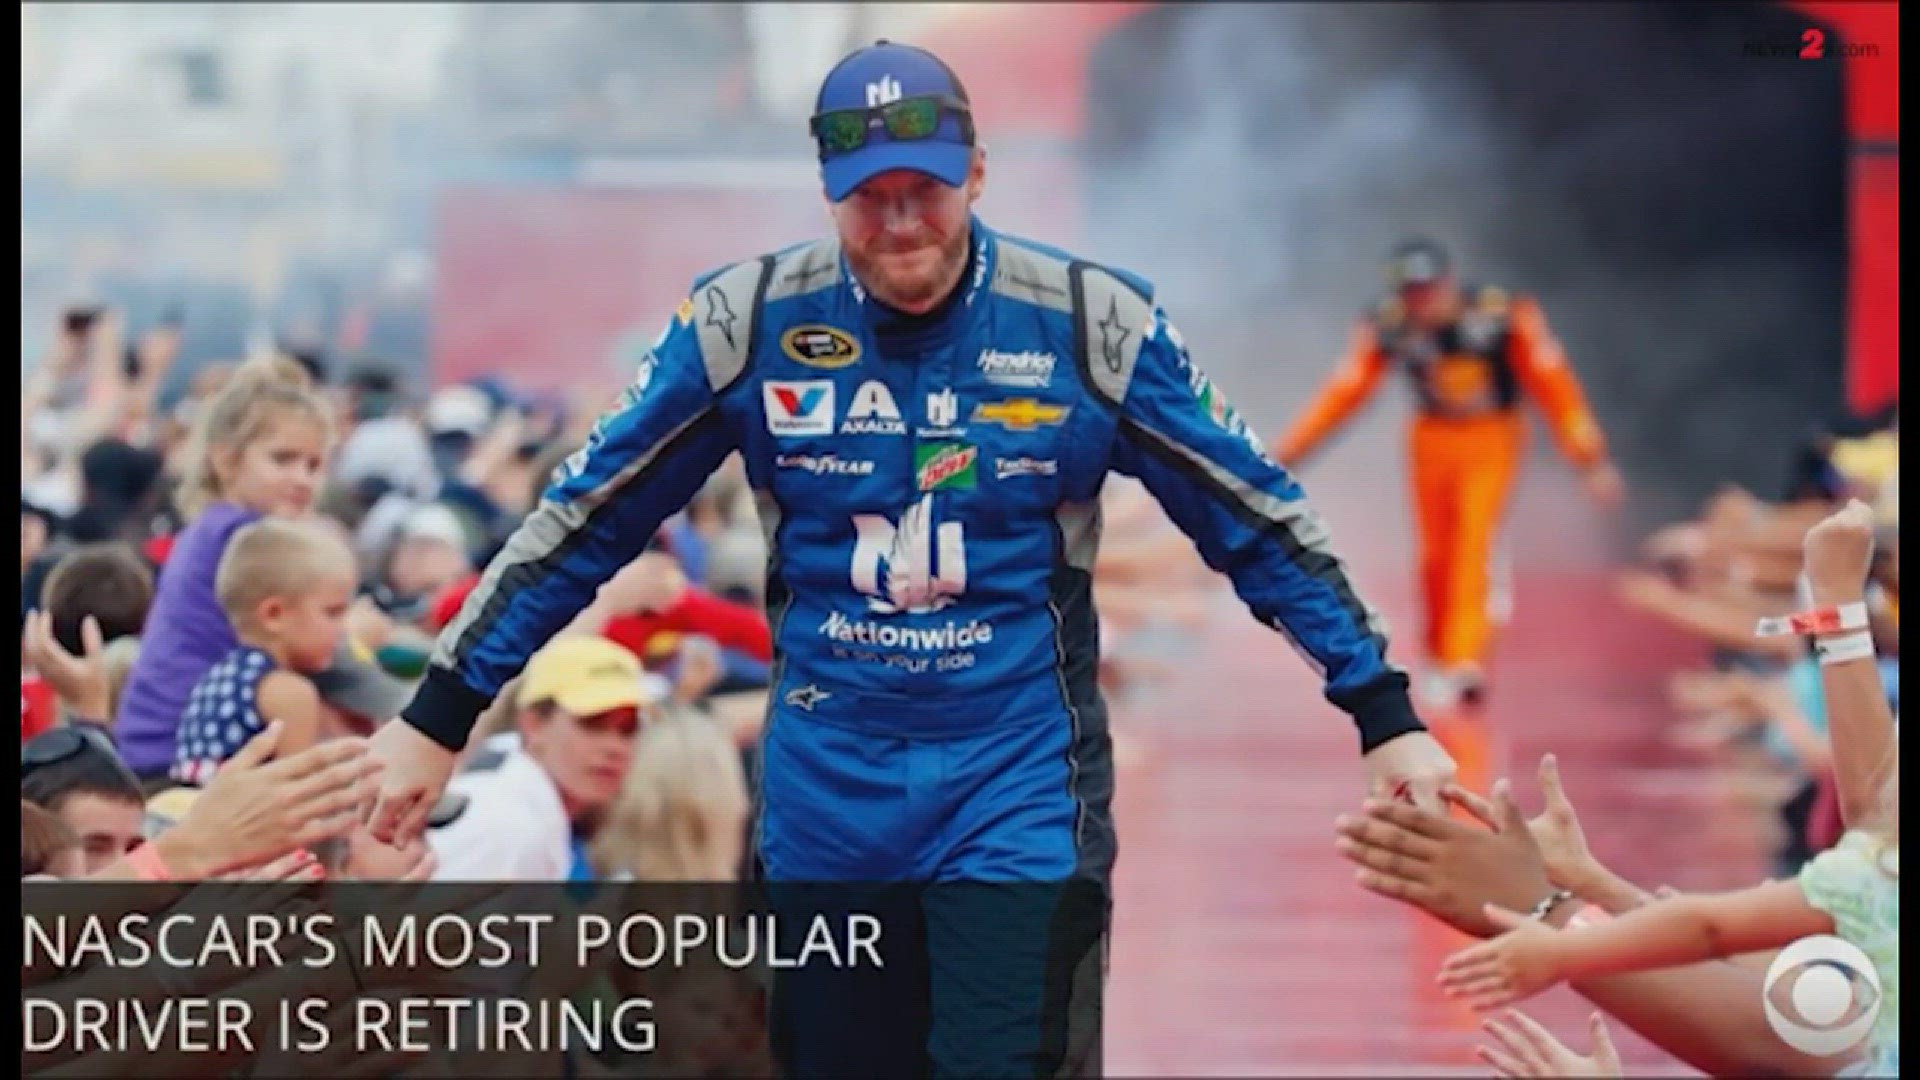 NASCAR'S most popular driver is retiring